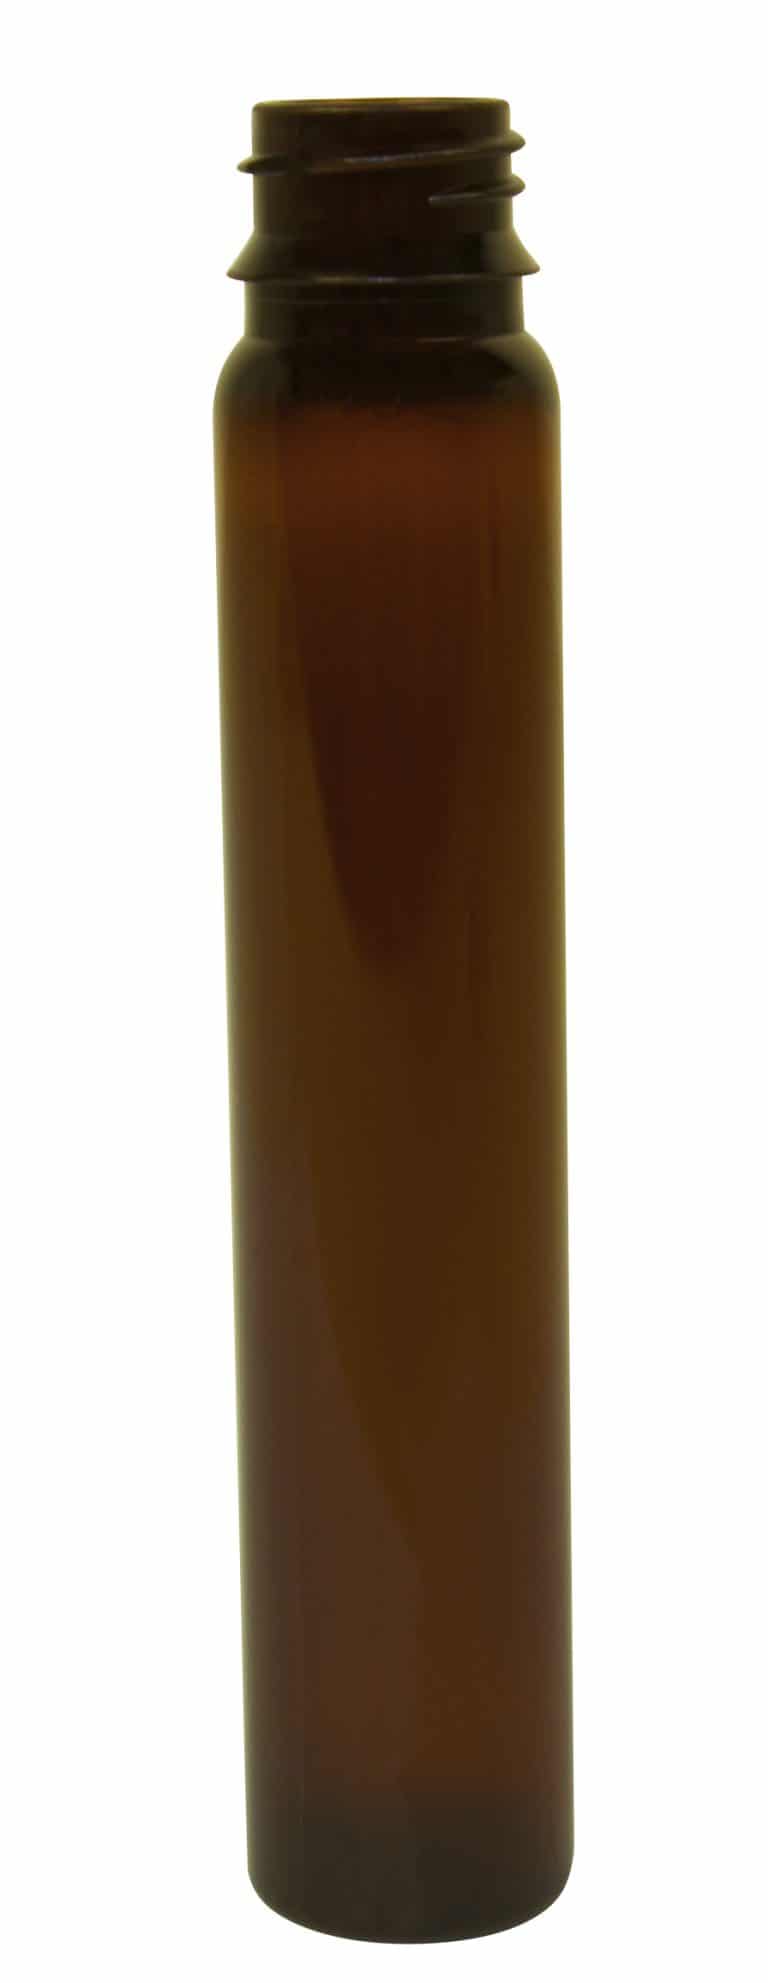 Monodose 025ml 17,8mm PET amber